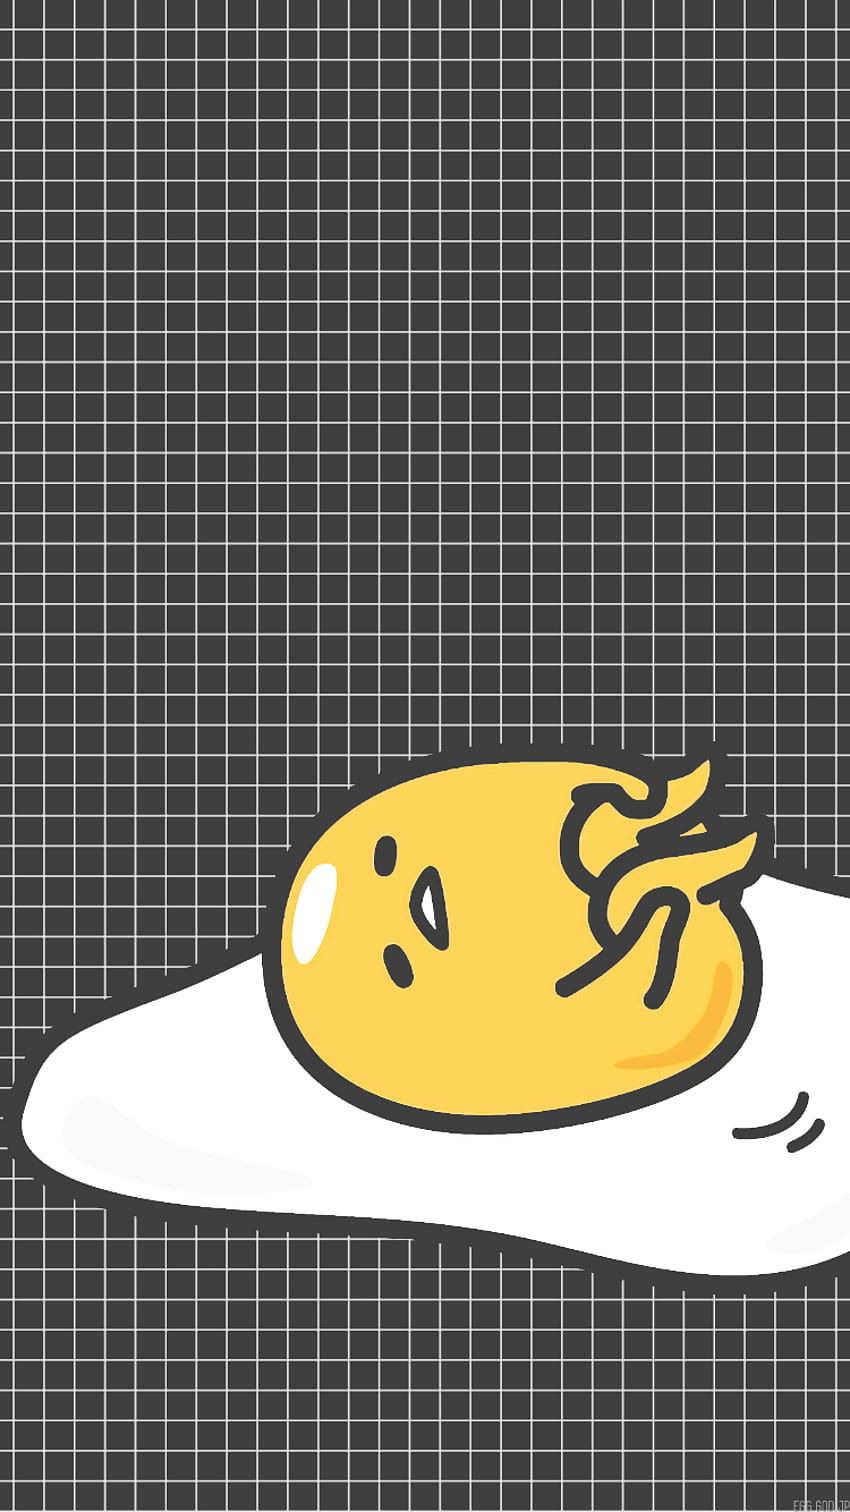 Gudetama on a fried egg wallpaper - Gudetama